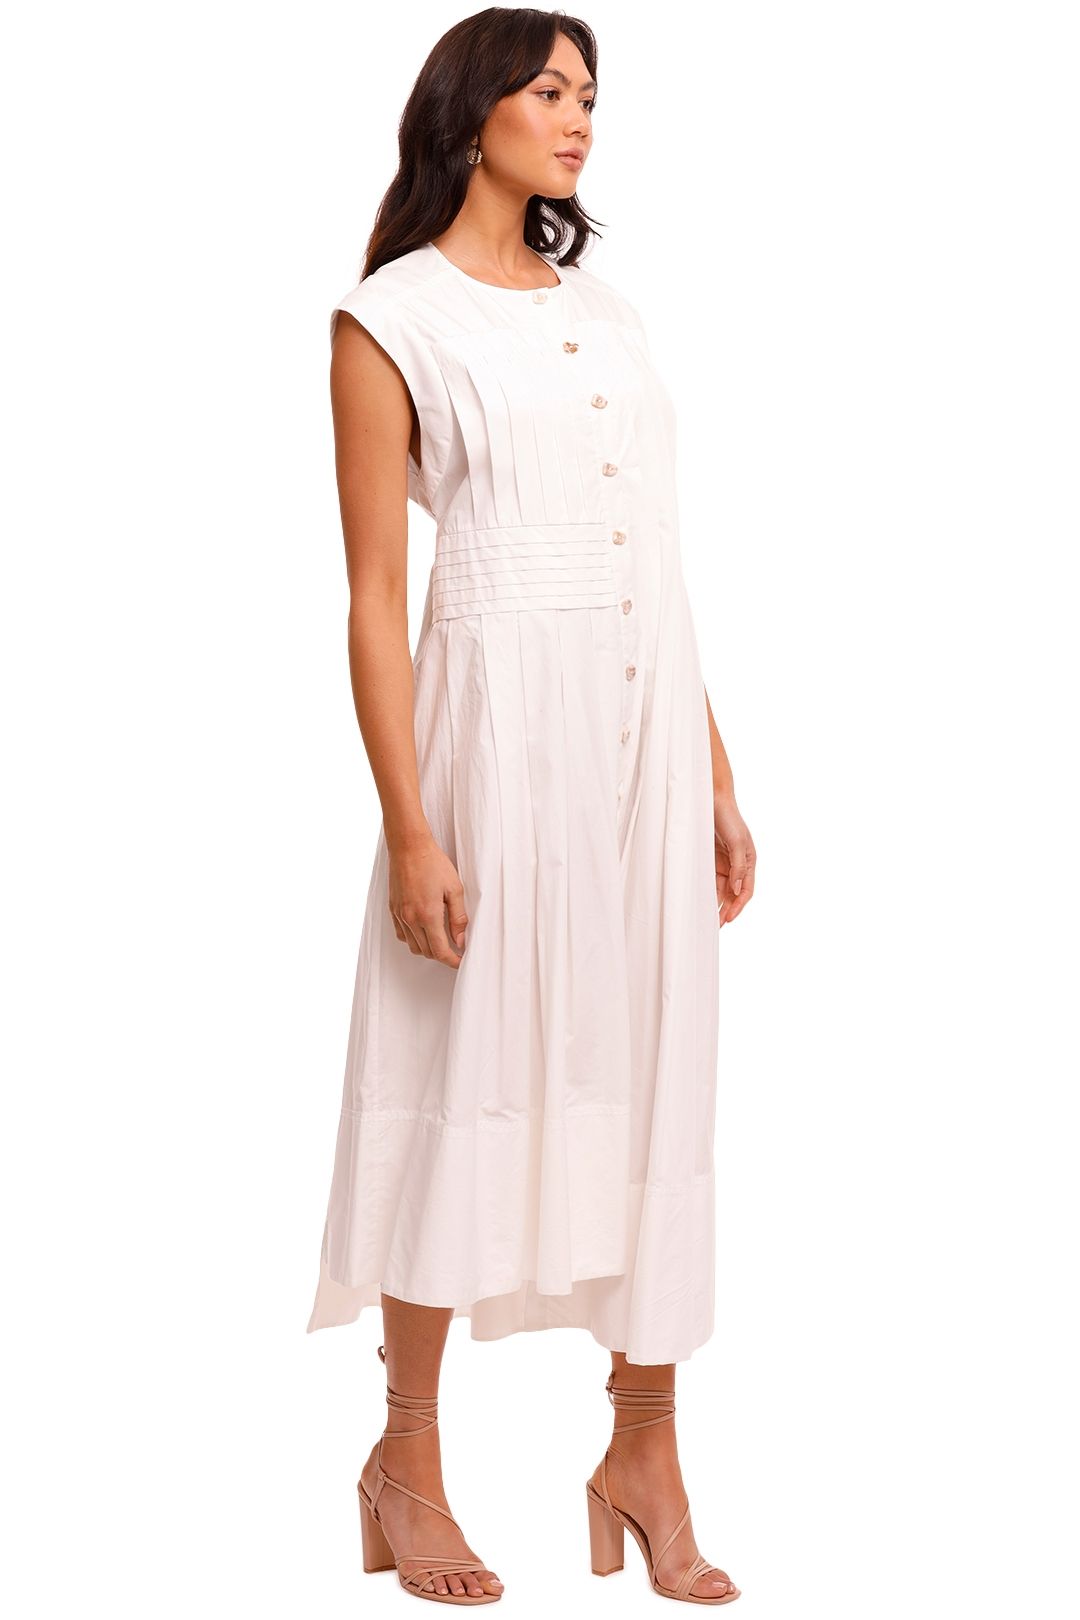 AJE Midsummer Dress white